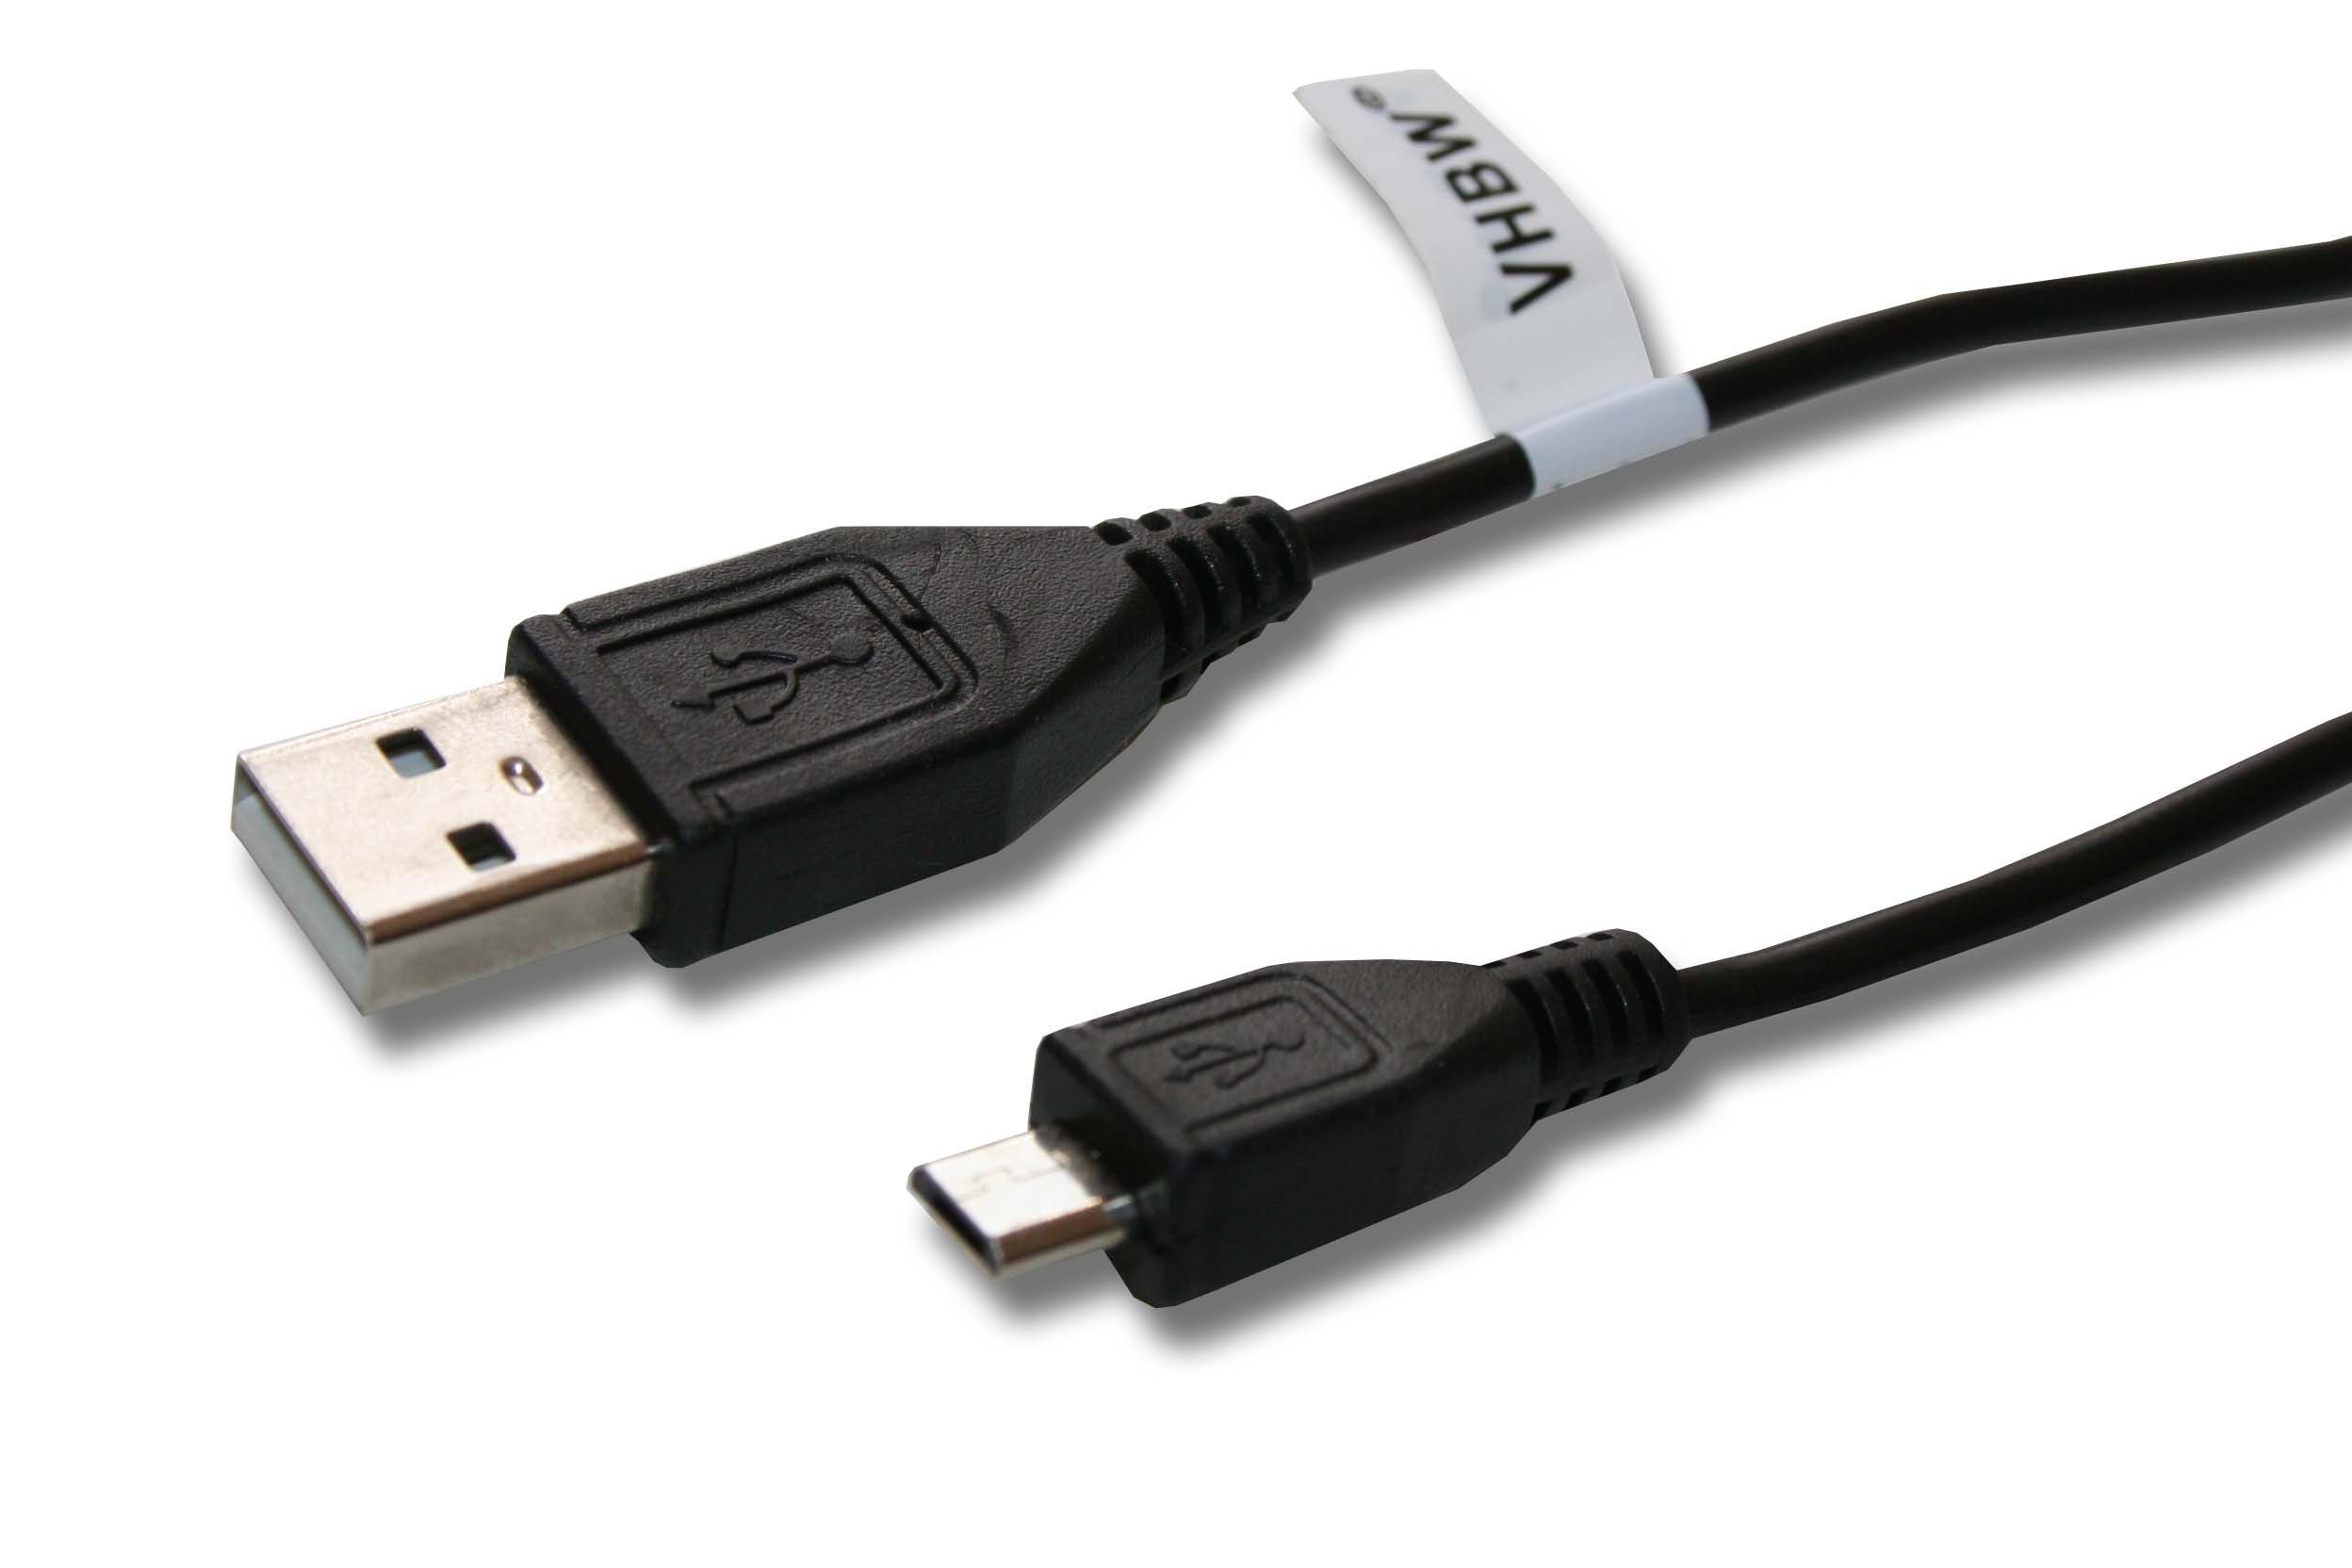 vhbw »passend für Samsung Galaxy Tab A, SM-T555, SM-T555N Kamera«  USB-Kabel, Micro-USB, passend für Samsung Galaxy Tab A, SM-T555, SM-T555N  Kamera